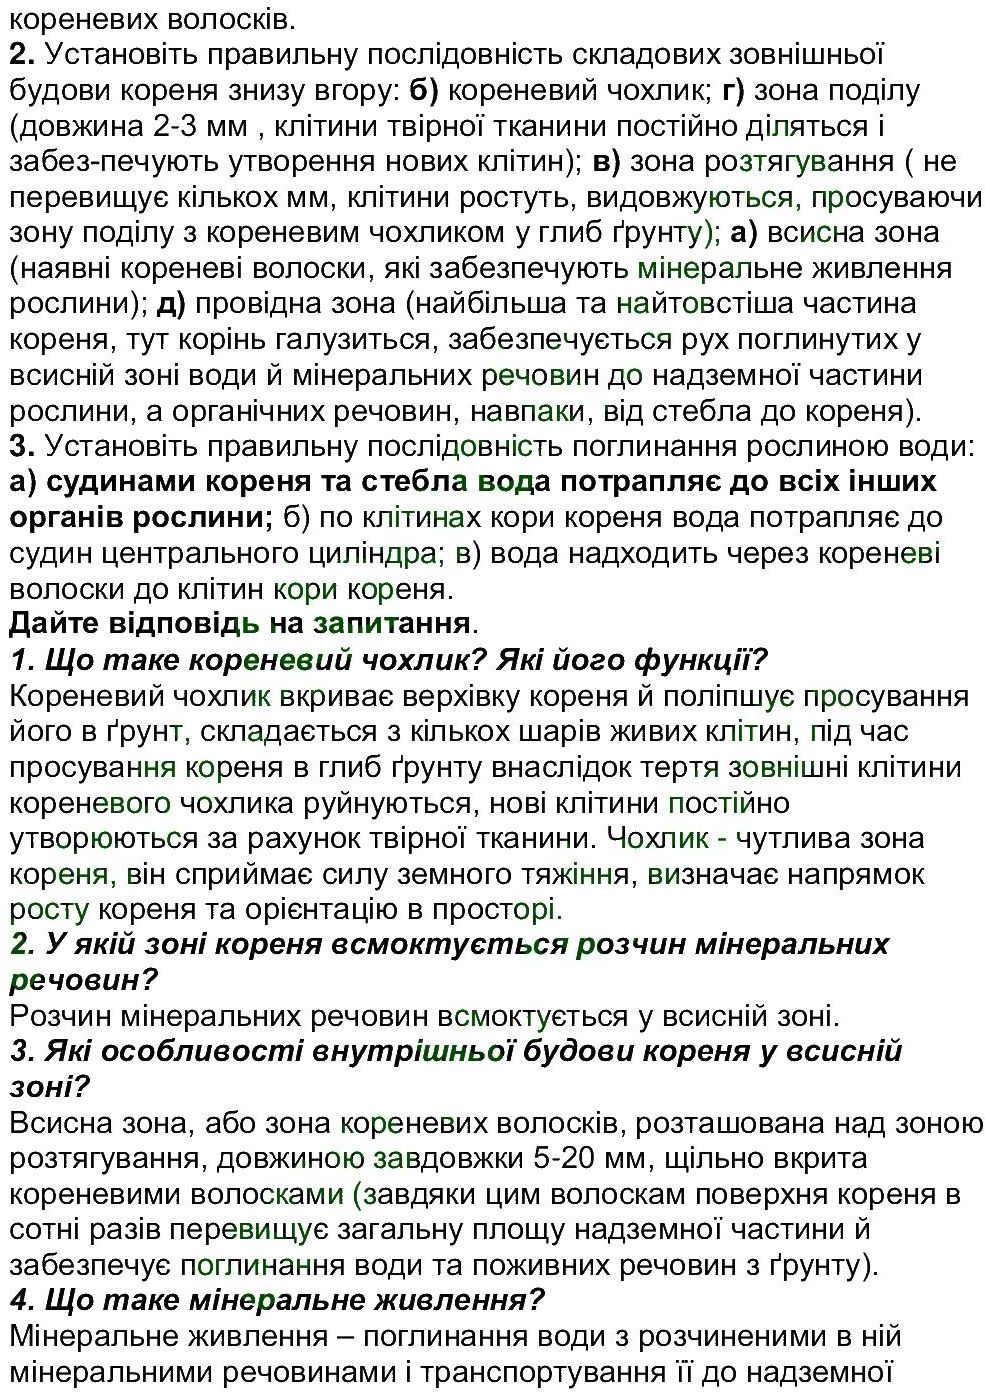 6-biologiya-li-ostapchenko-pg-balan-nyu-matyash-2016--tema-3-roslini-ст86-92-rnd1129.jpg